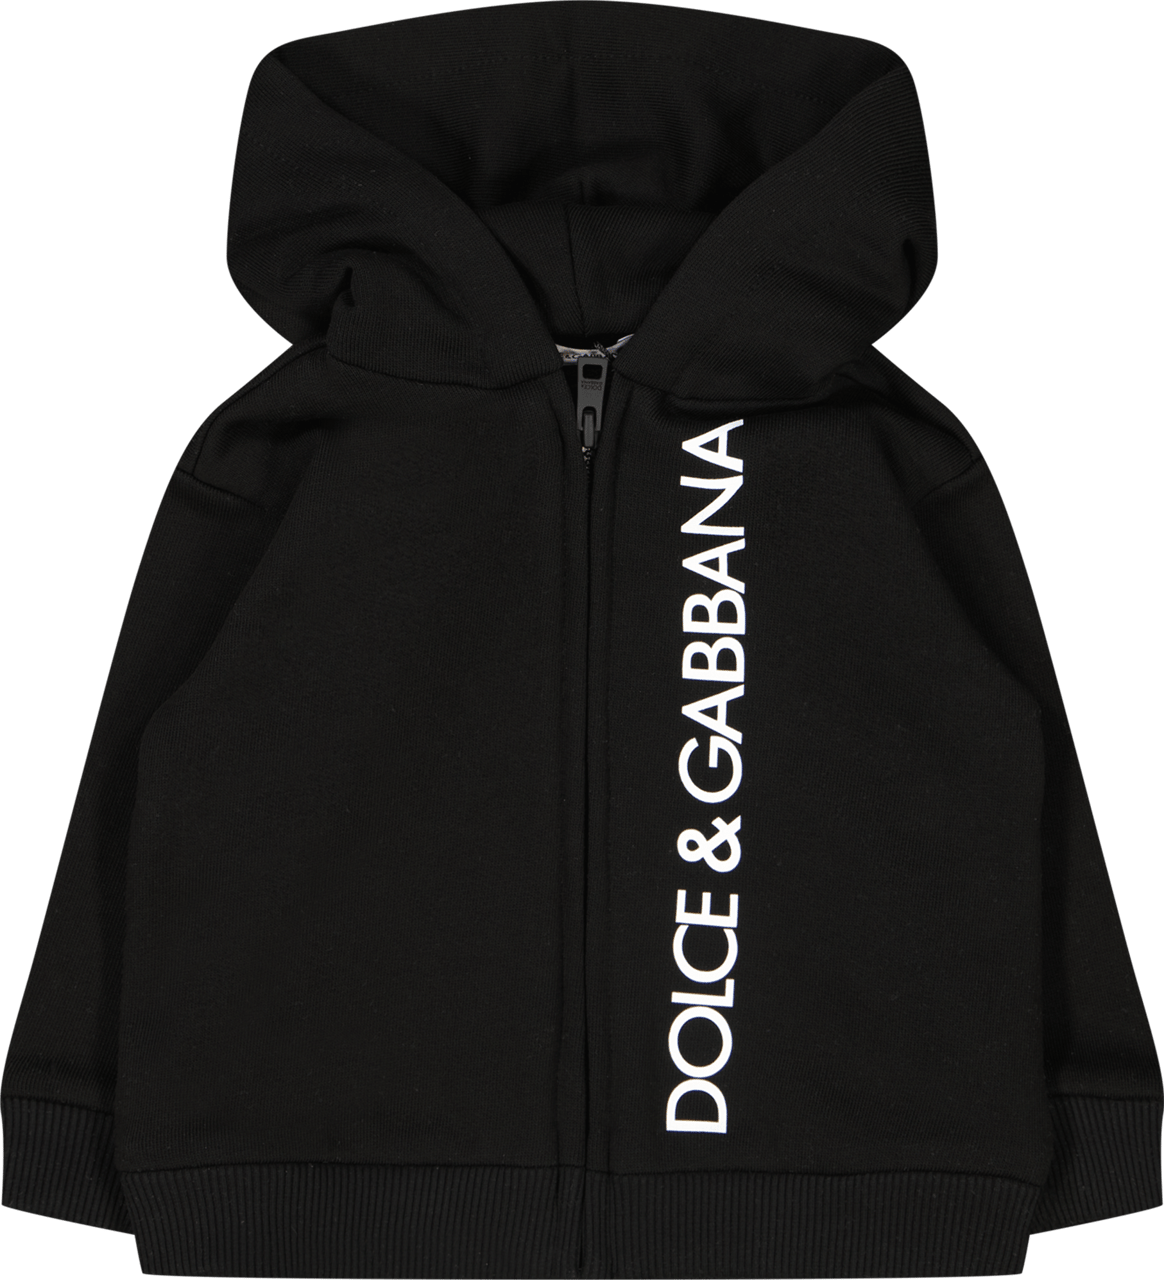 Dolce & Gabbana Dolce & Gabbana Baby Jongens Vesten Zwart Zwart